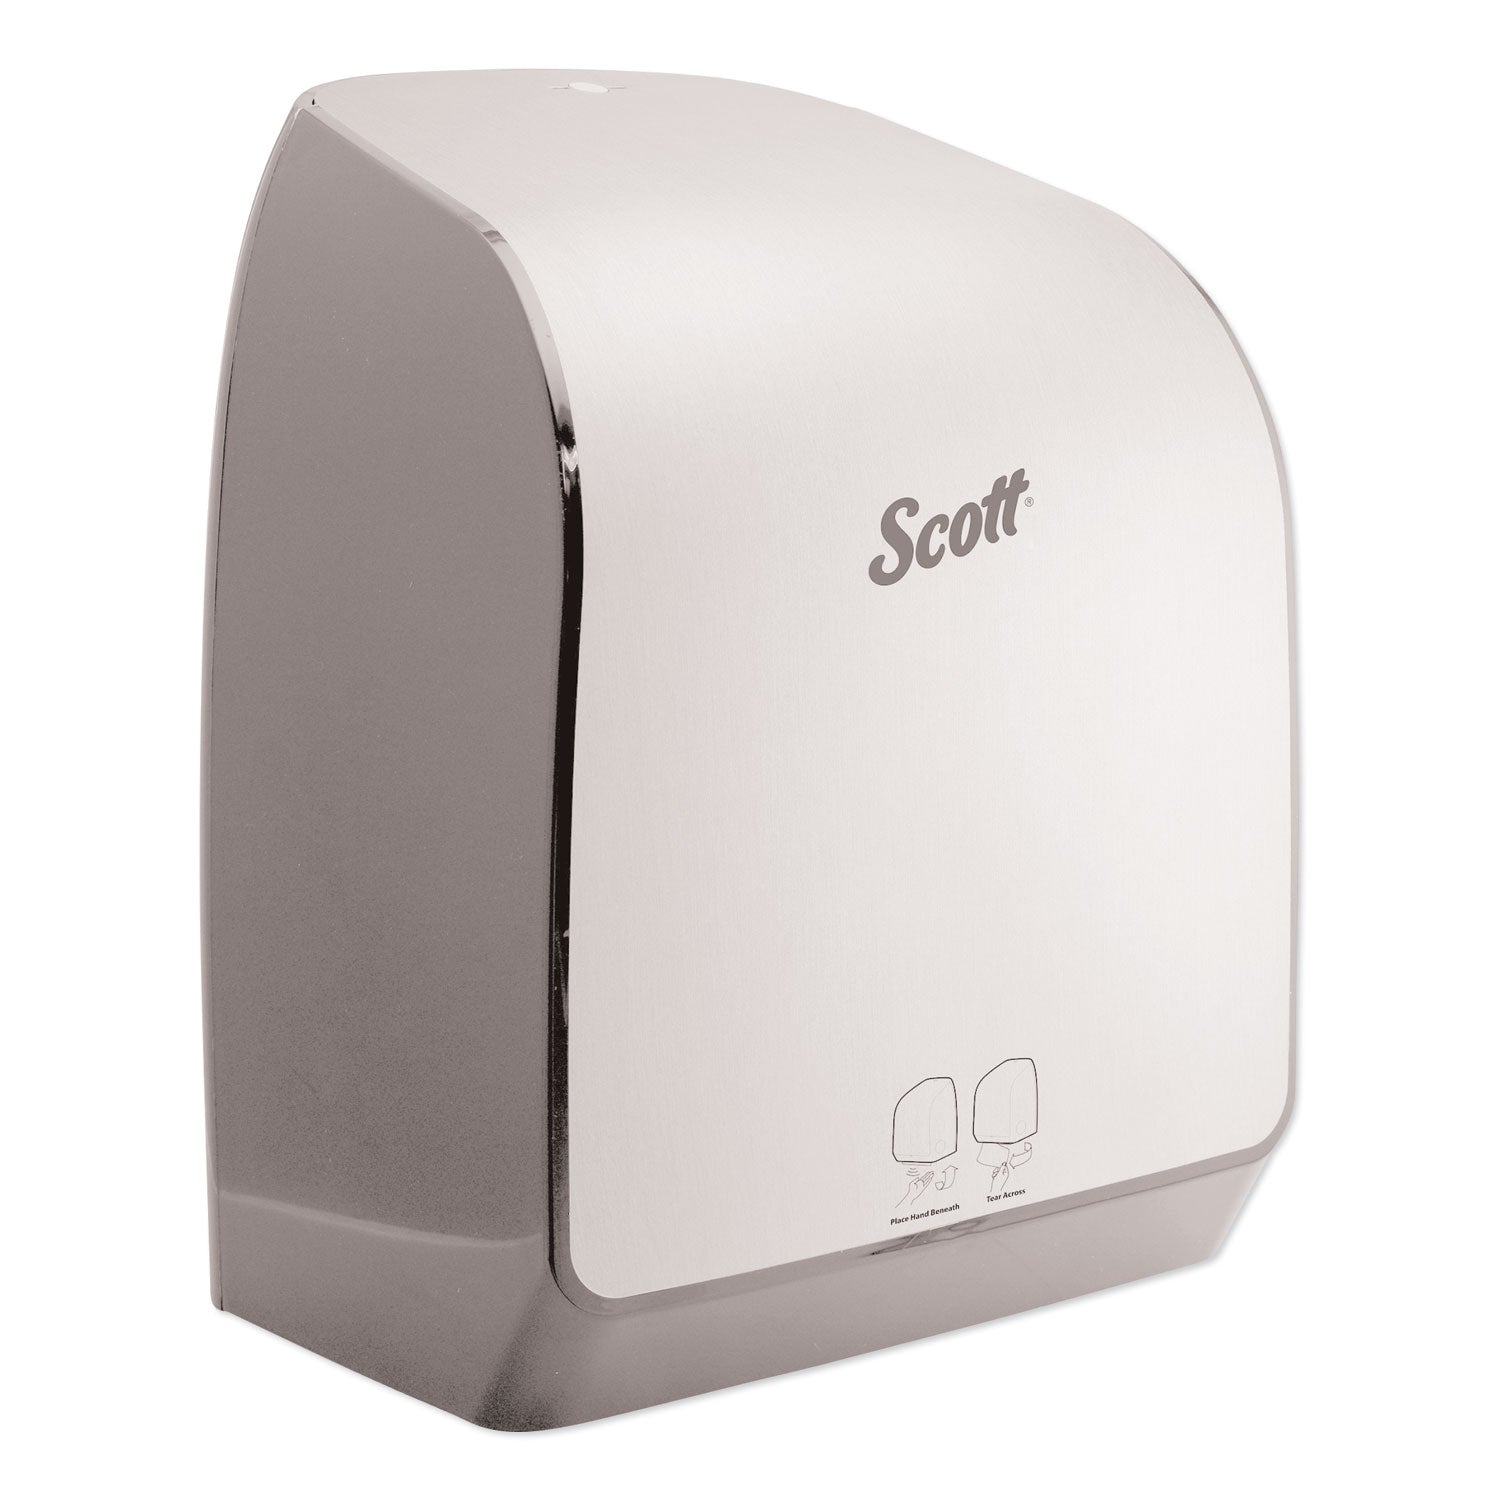 Scott Pro Electronic Hard Roll Towel Dispenser, 12.66 X 9.18 X 16.44, Brushed Silver - KCC35609